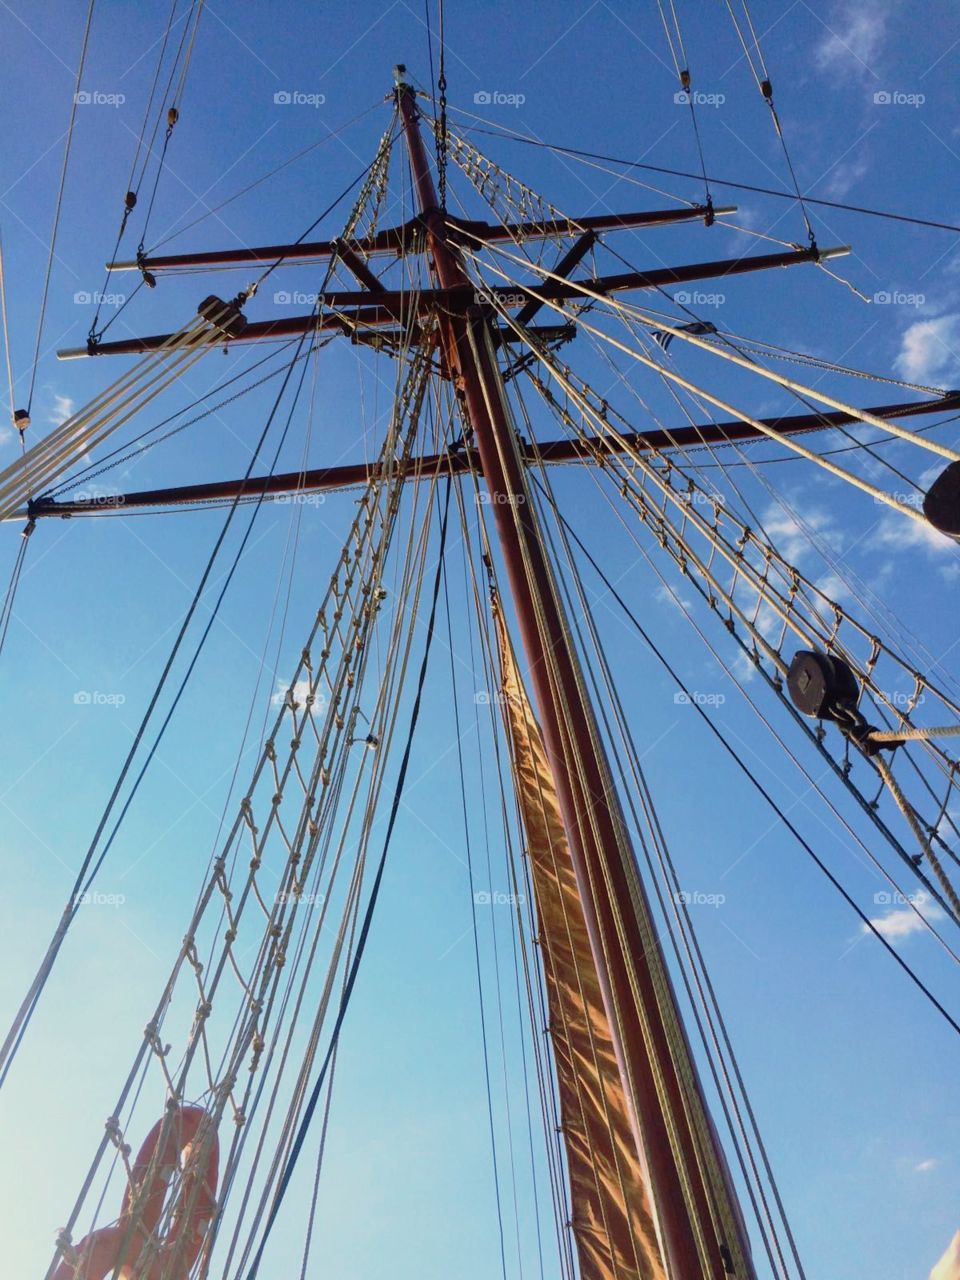 Ship Mast and Rigging